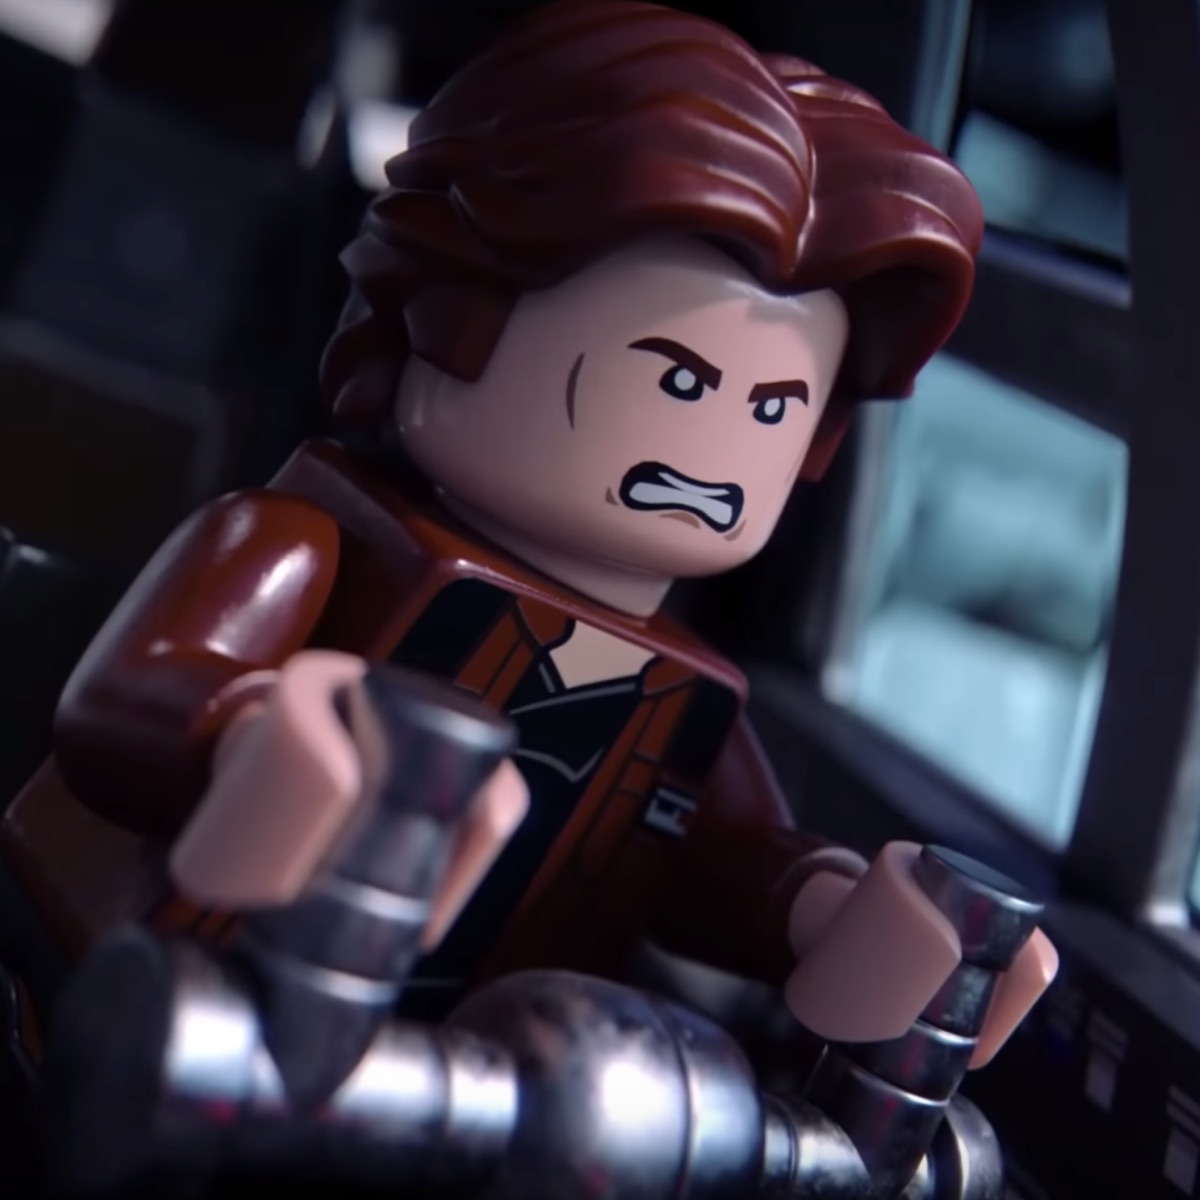 *NEW* Lego Minifig Star Wars HAN SOLO 